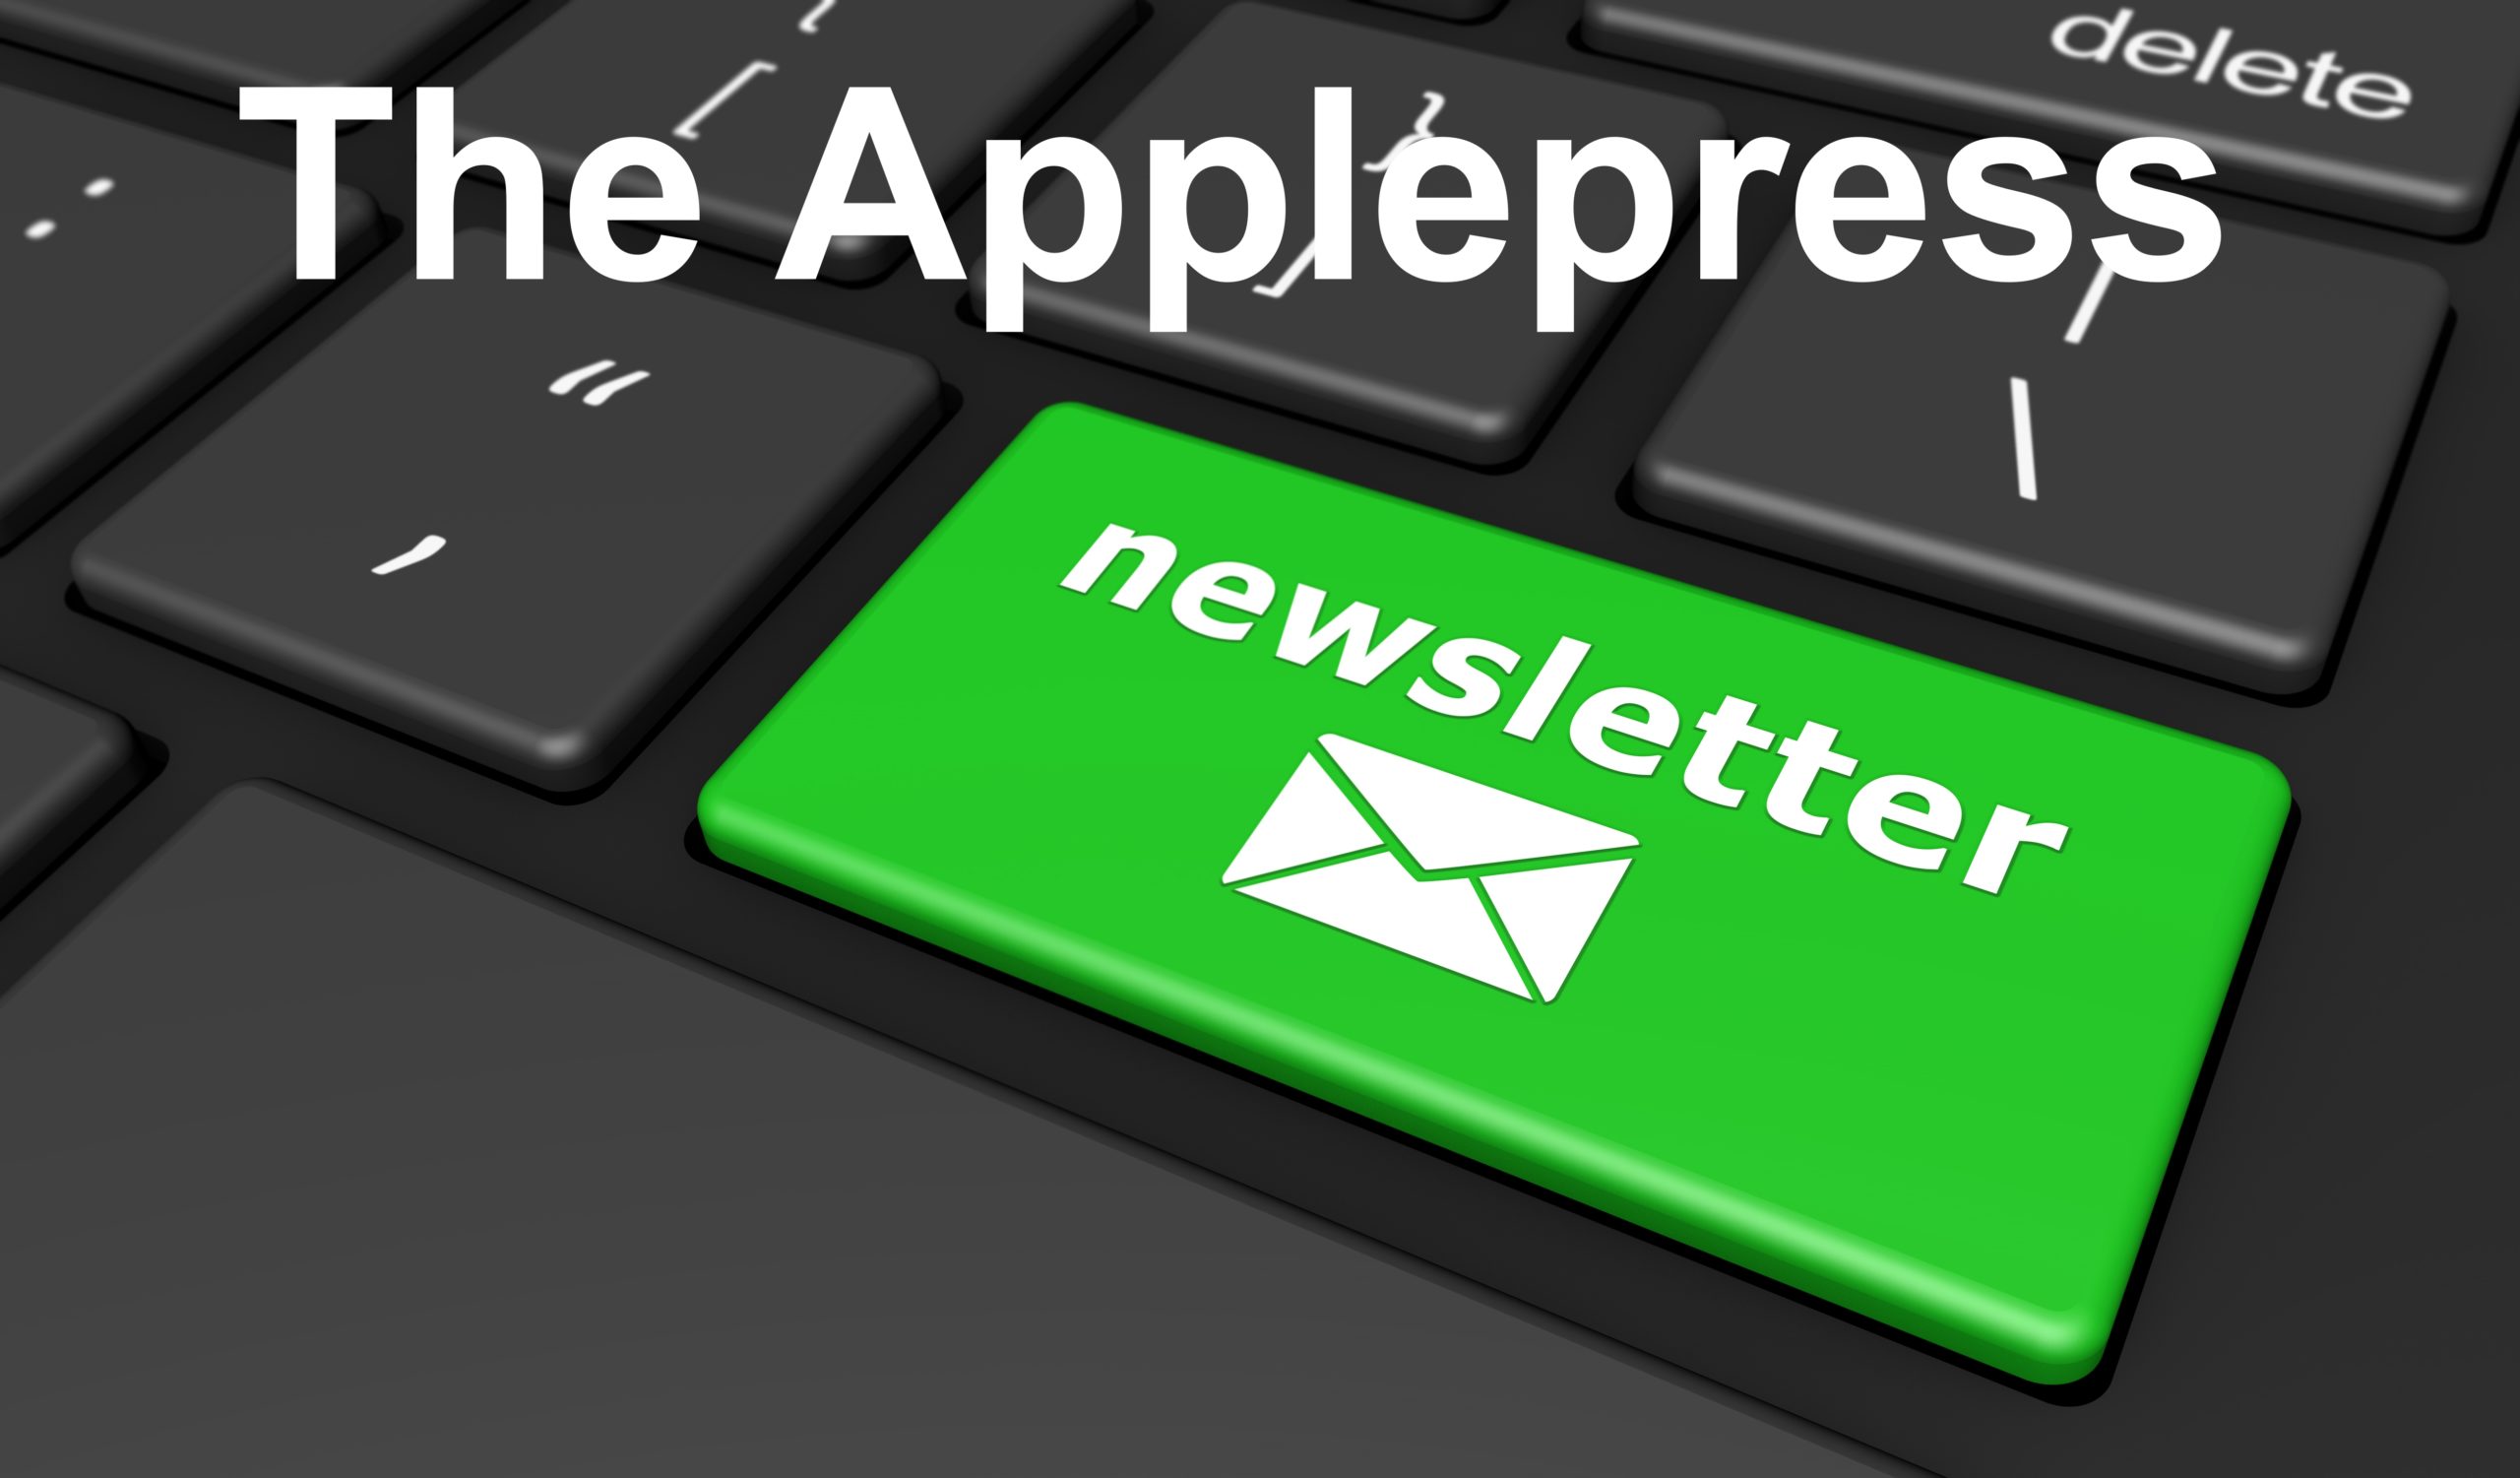 Applepress Newsletters